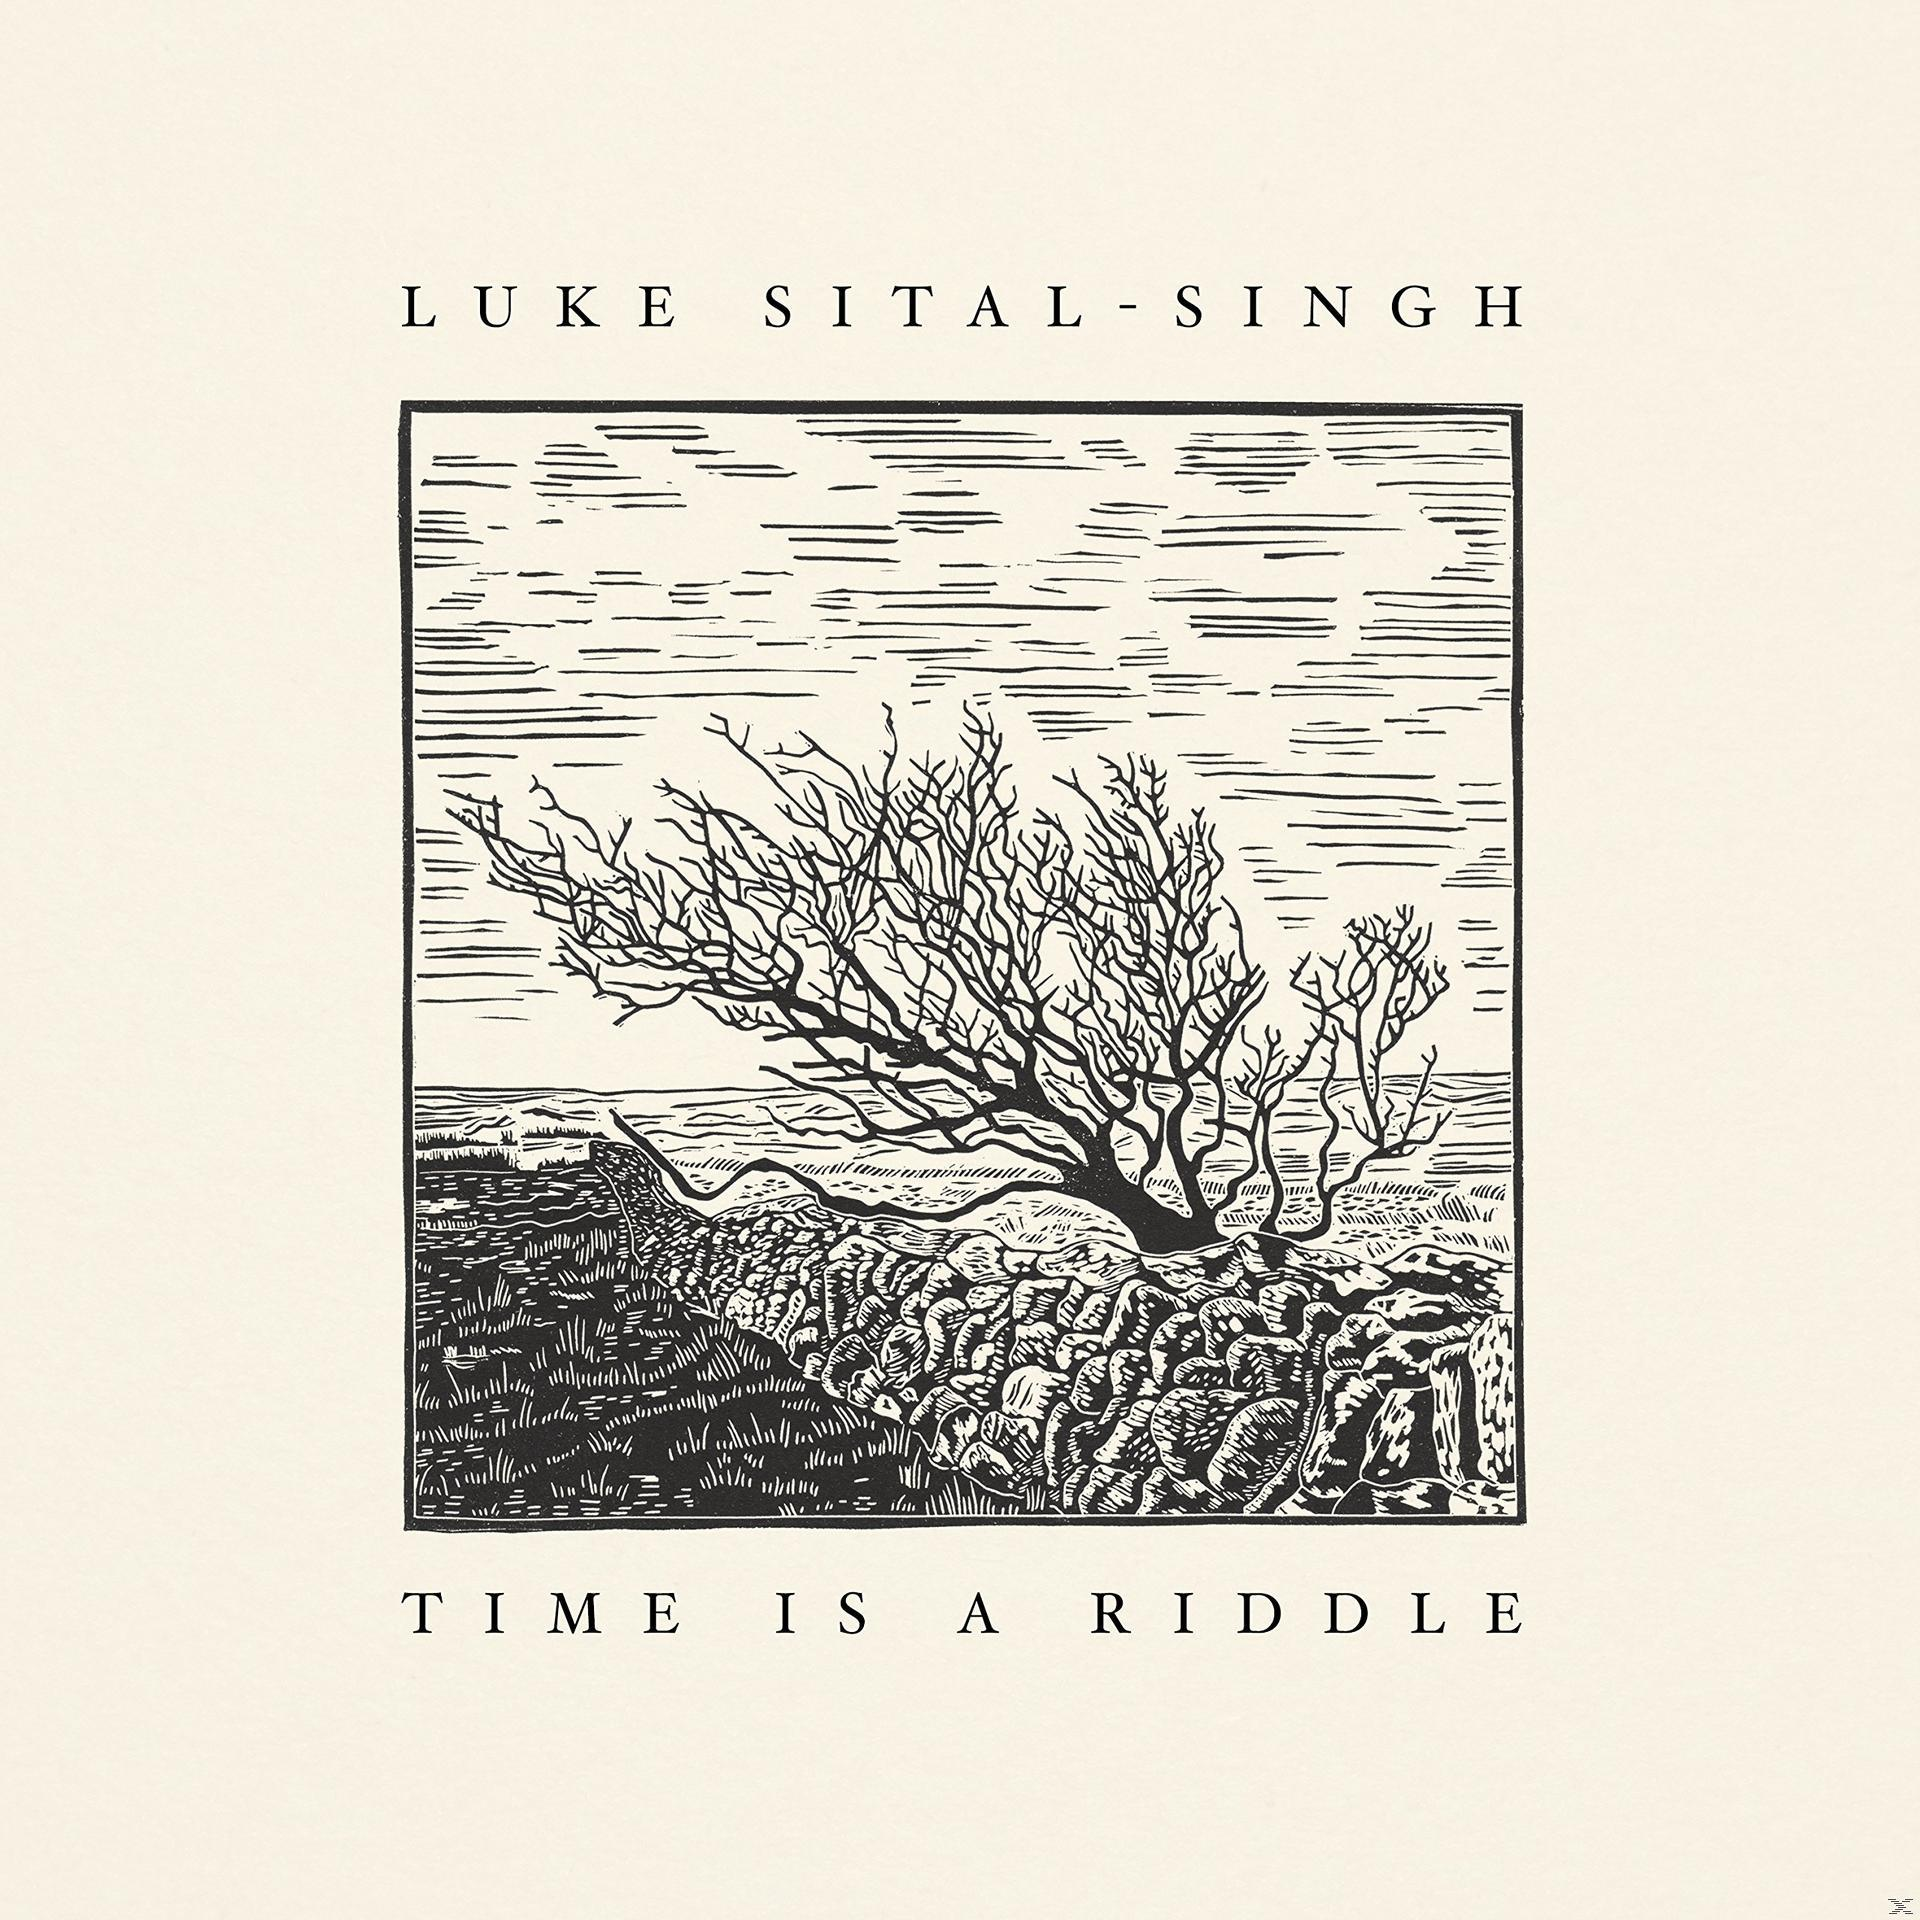 Is Riddle A Sital-singh - Luke - Time (CD)